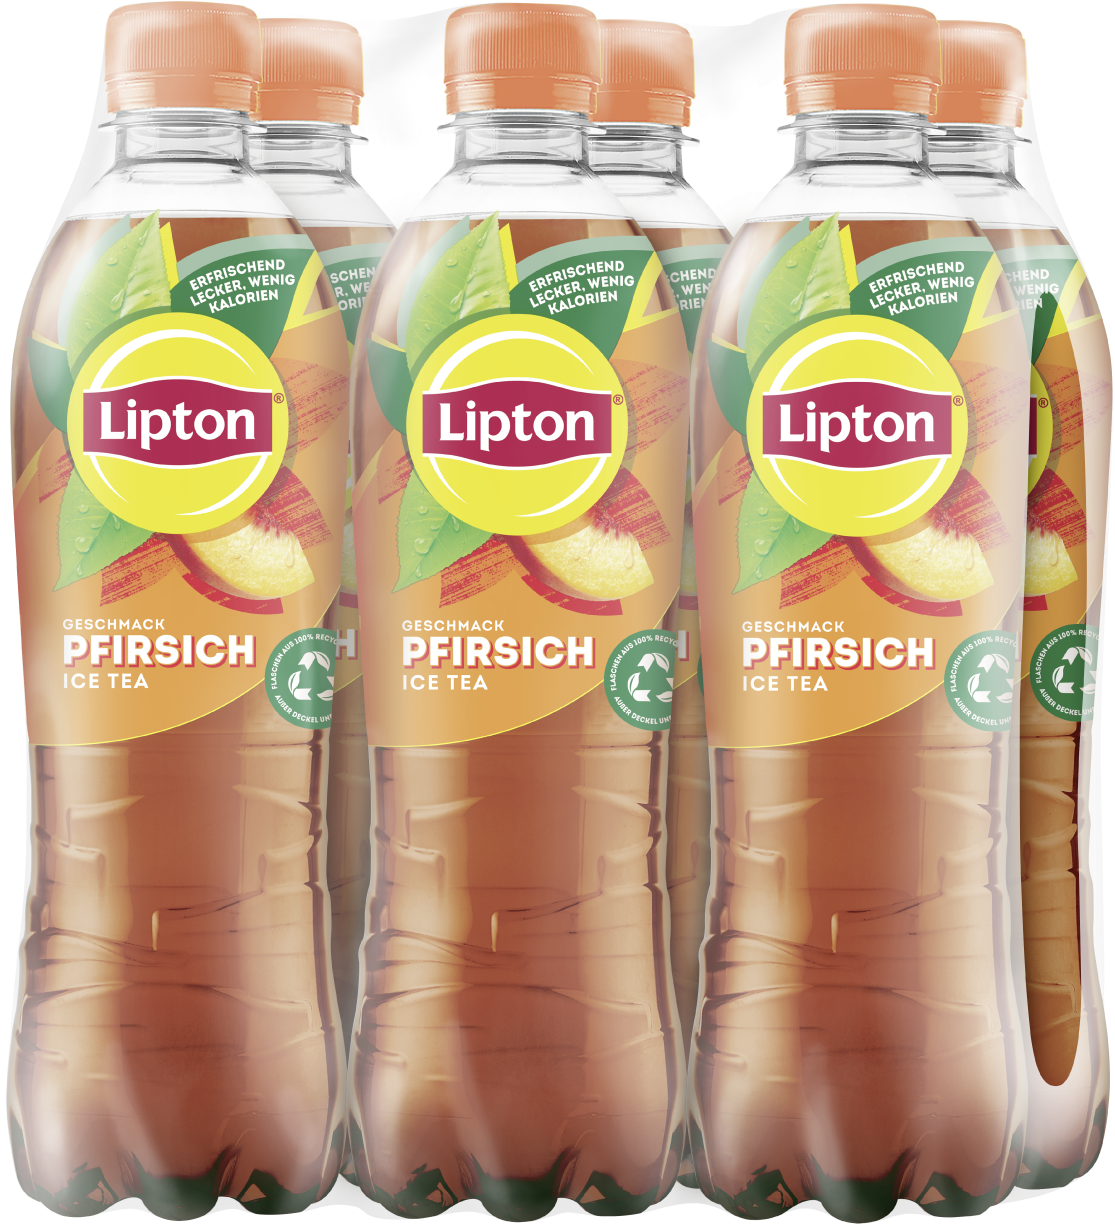 Lipton Pfirsich-Eistee 6 x PET 500 ml